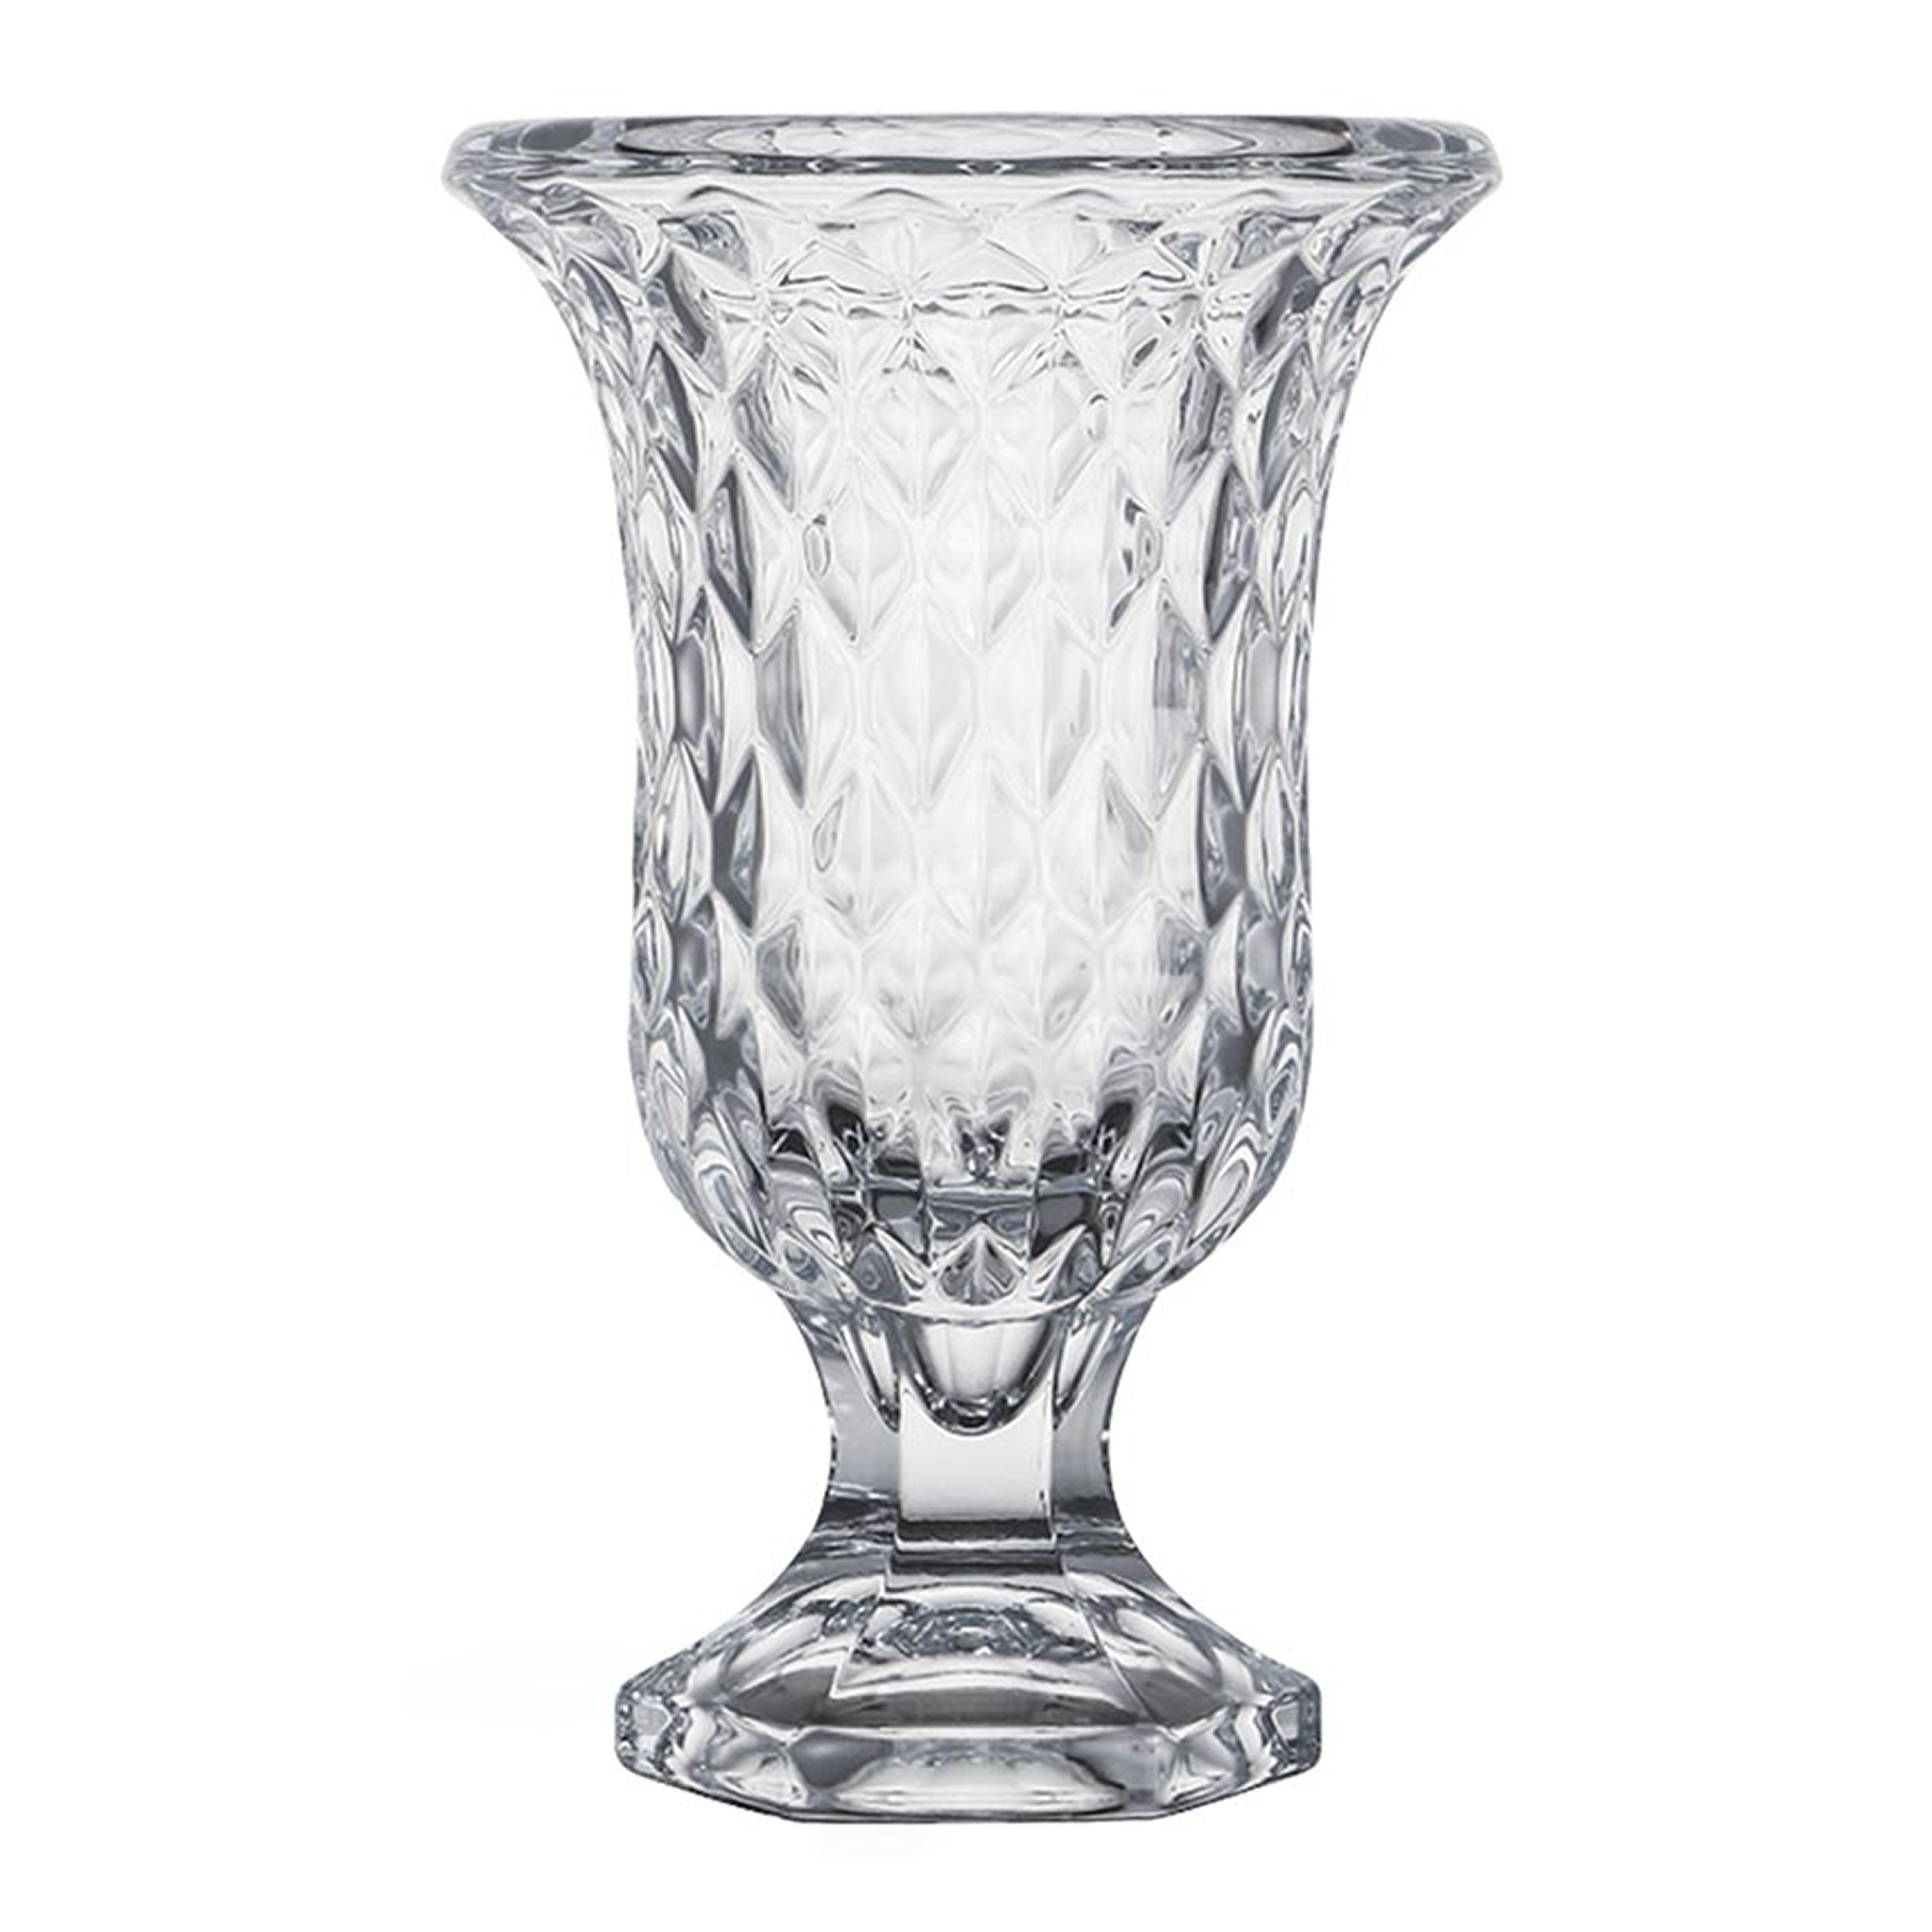 Bloemenvaas Tulp model Diamonds transparant glas 15 x 24 cm